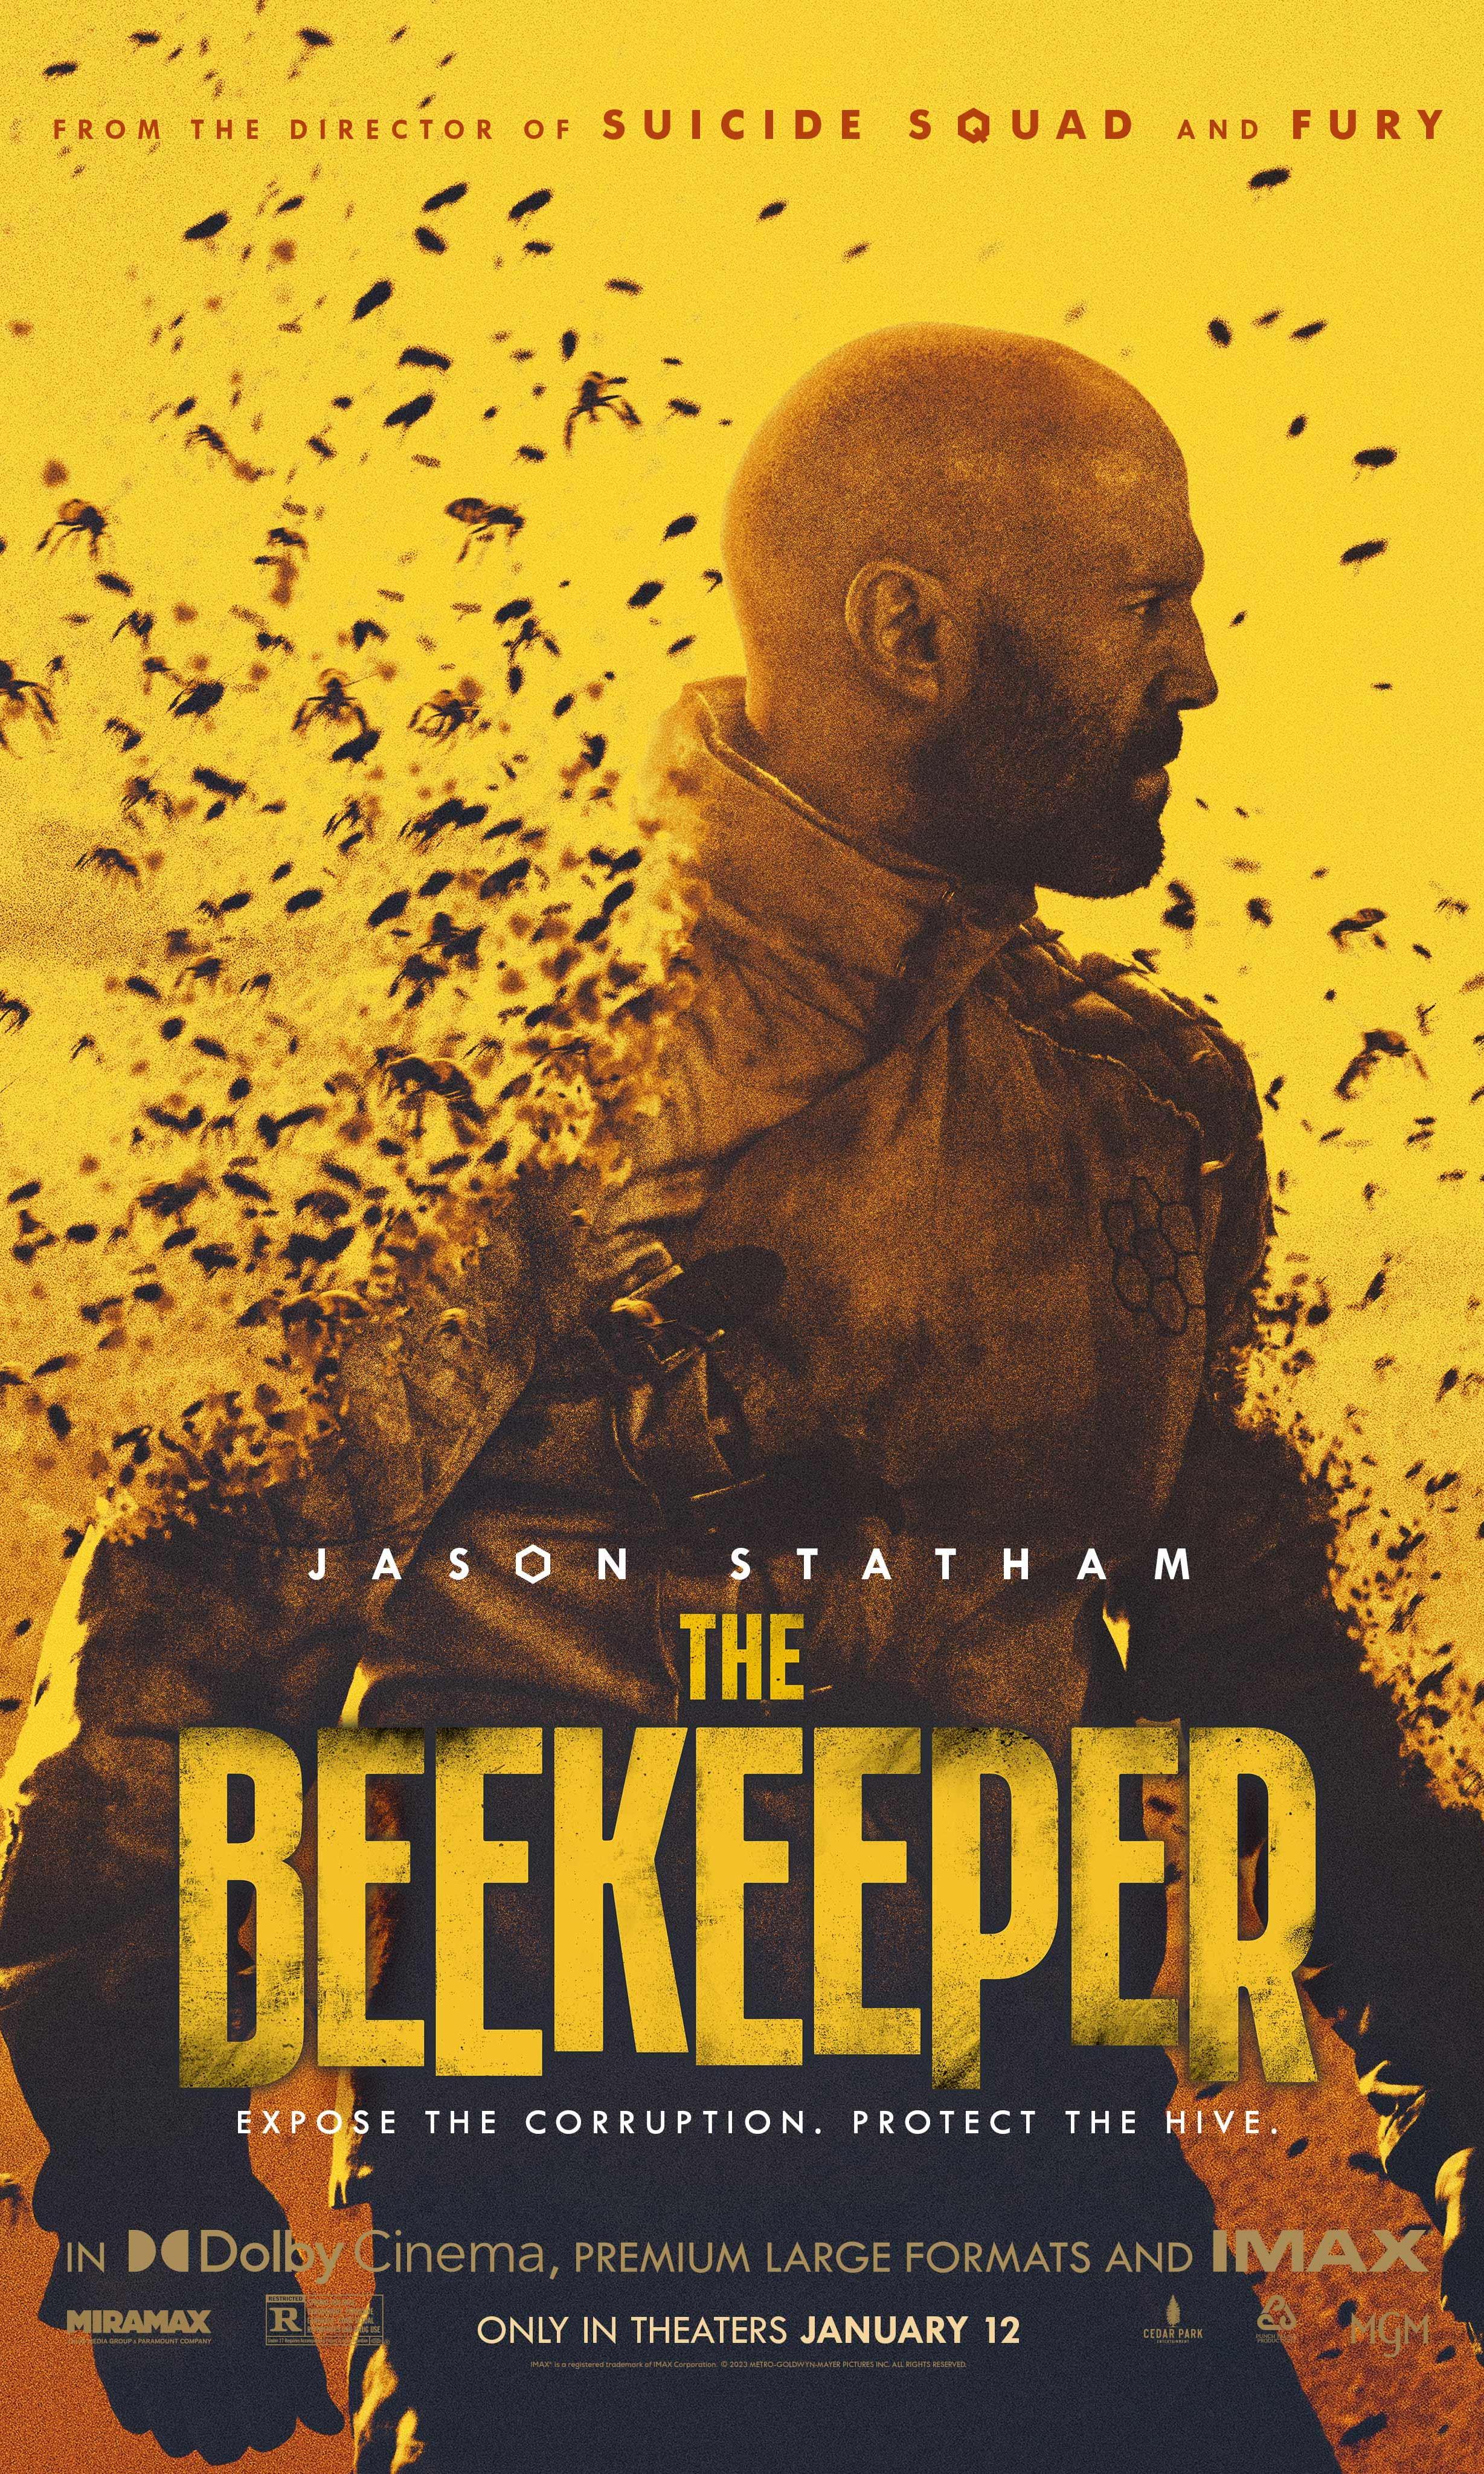 The Beekeeper starring Jason Statham